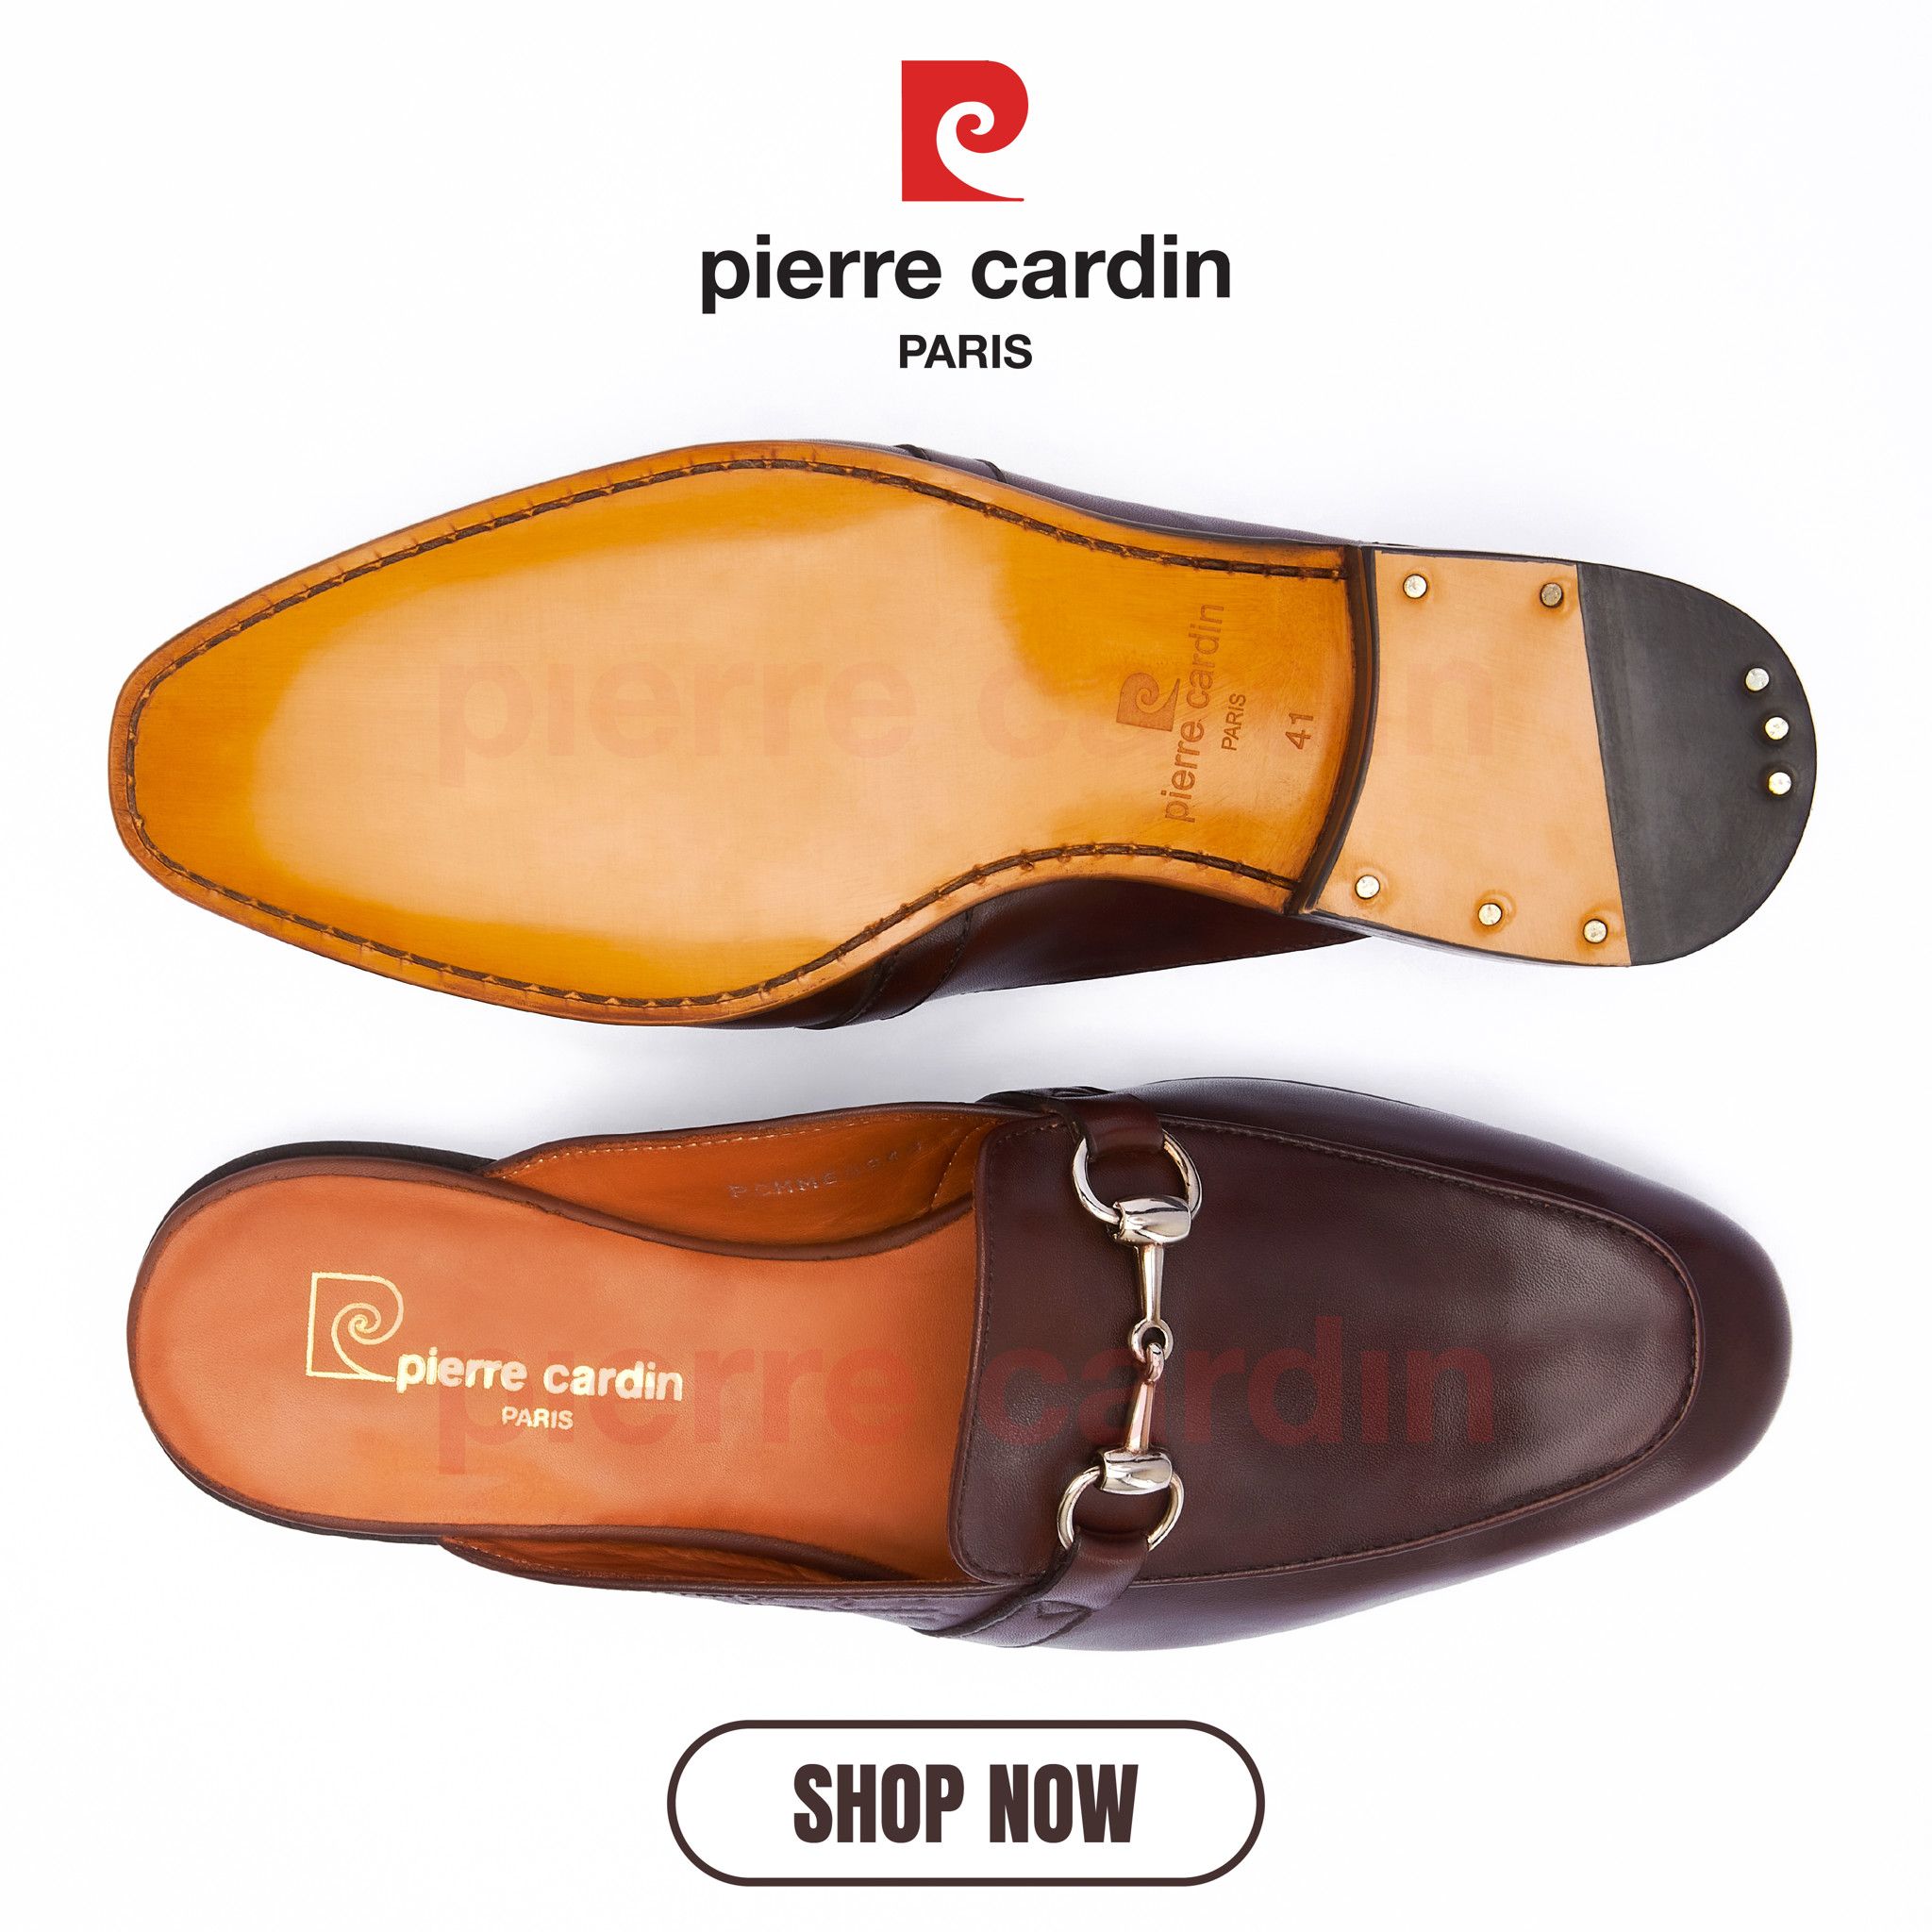 Pierre Cardin Paris Vietnam: Sapo Shoes - PCMFWLE 501